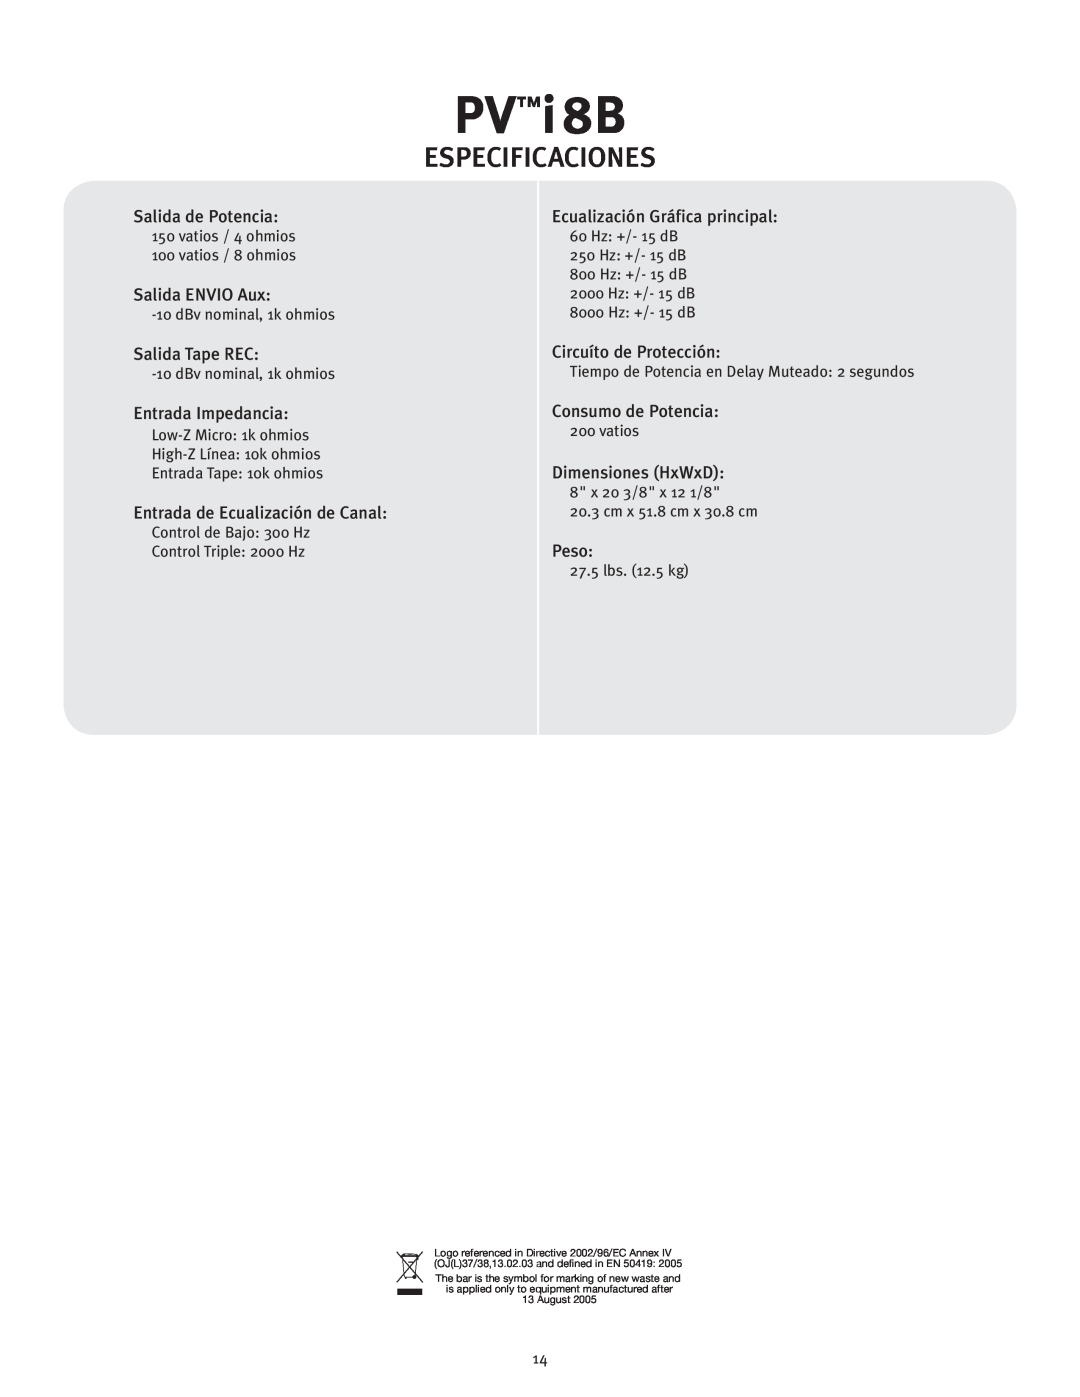 Peavey PVTMi 8B manual Especificaciones, PVi 8B 